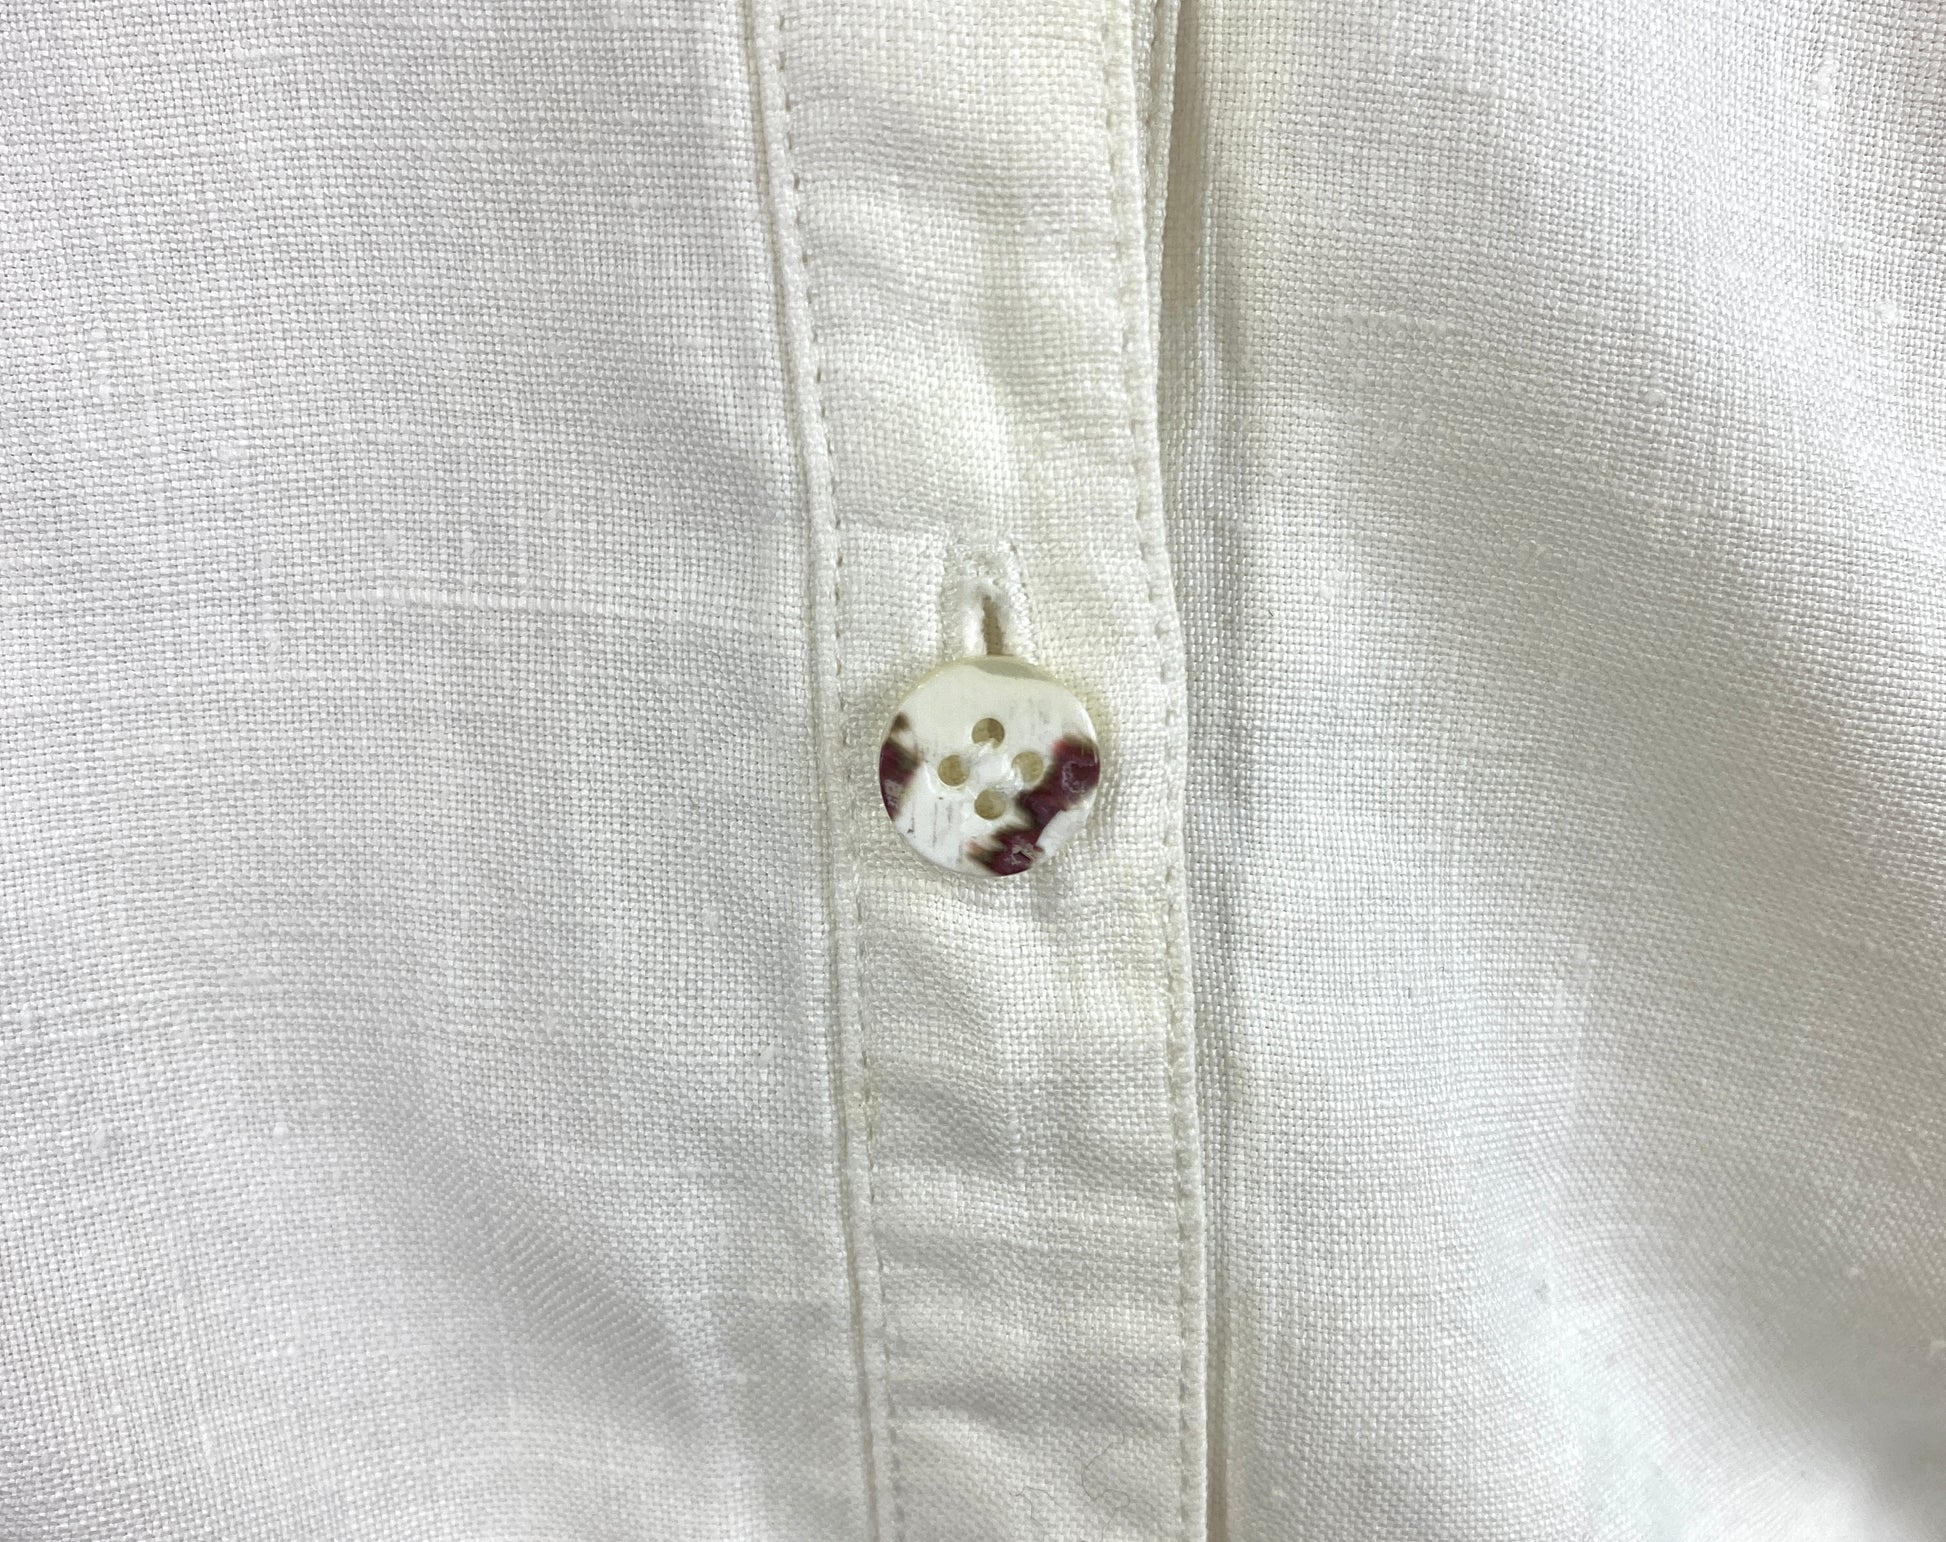 Vintage 1980s White Linen Button-Up Blouse, Alke Boker